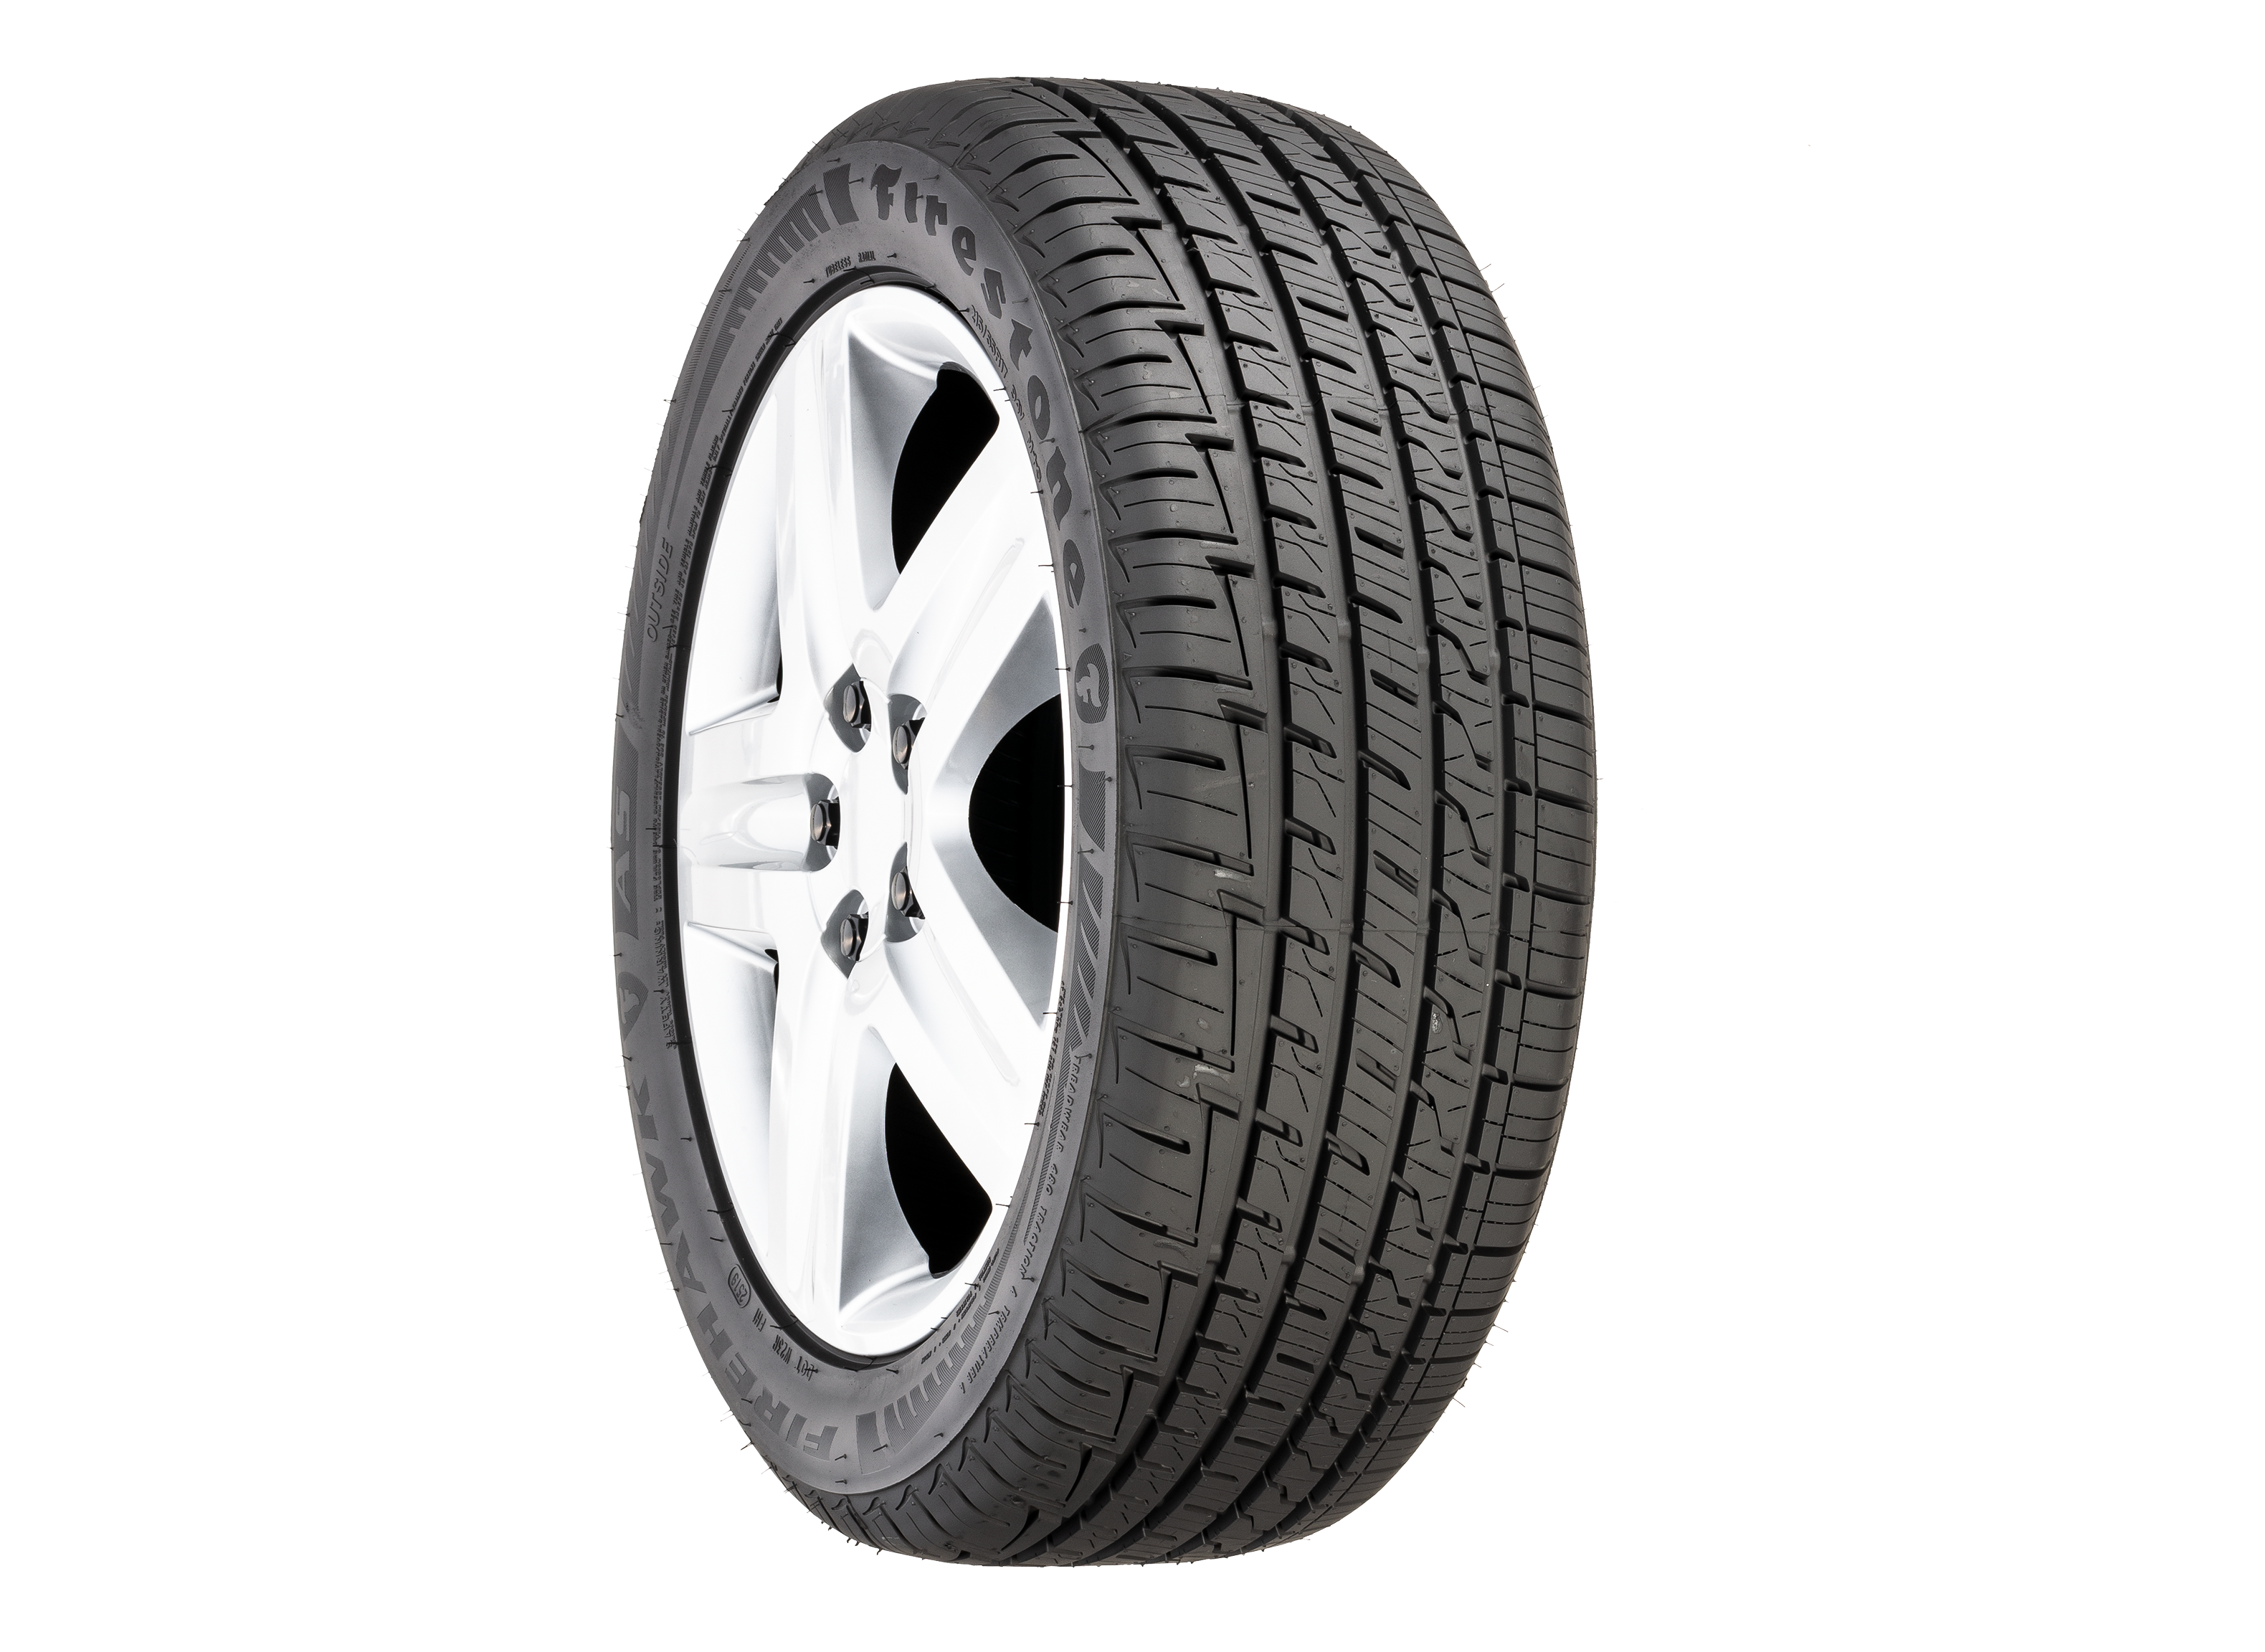 Firestone Firehawk AS Tire Review - Consumer Reports